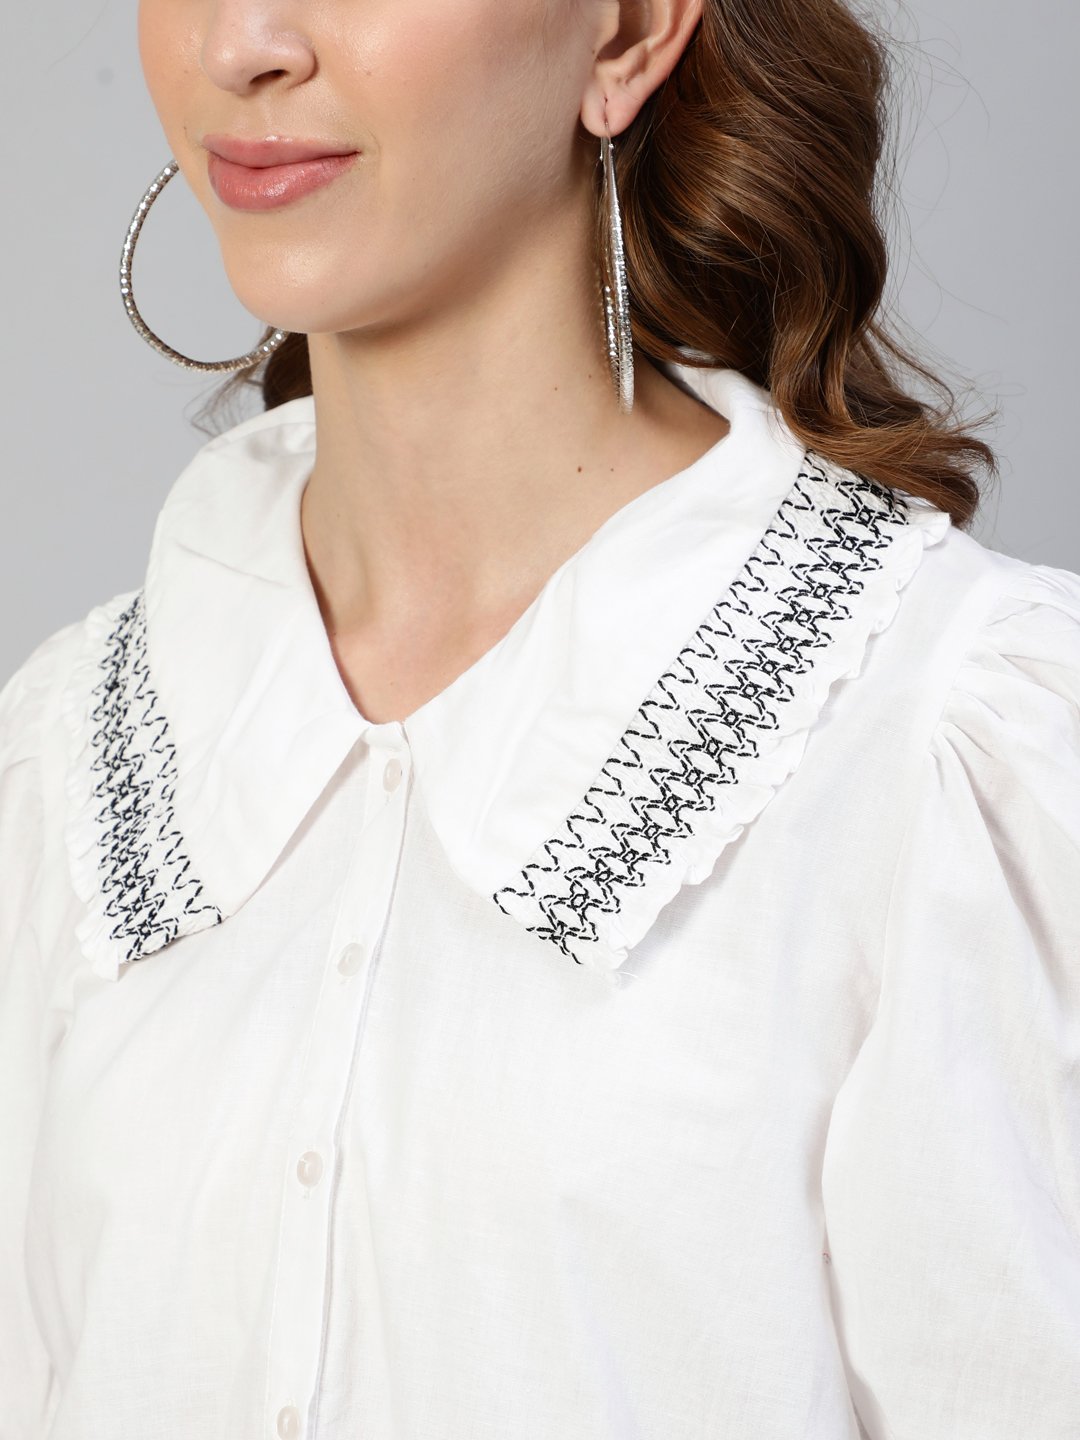 Ishin Women's White Pure Cotton Shirt Style Crop Top